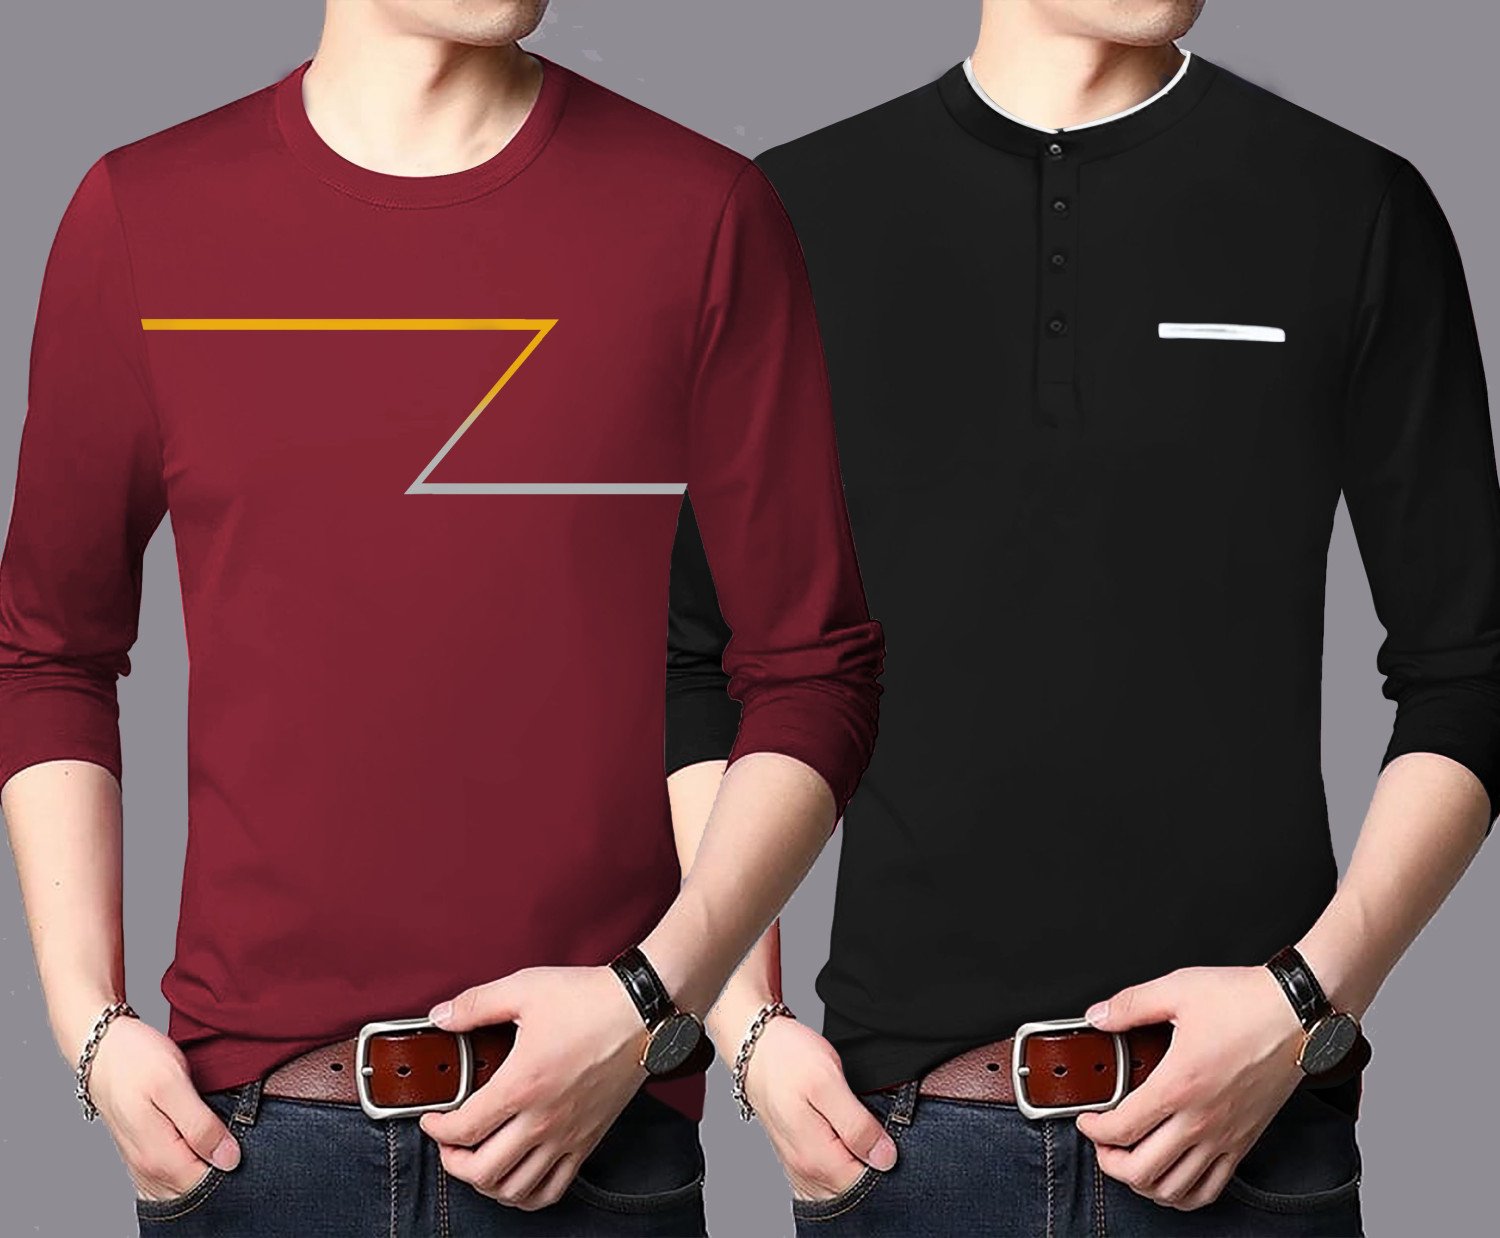 LG Garments Men's Trendy Stylish Round Neck Full Sleeves Cotton T-Shirts - Multi-colour (Combo Pack Of 2) | Men's T-Shirt (2 in 1) (S, M, L, XL, XXL)